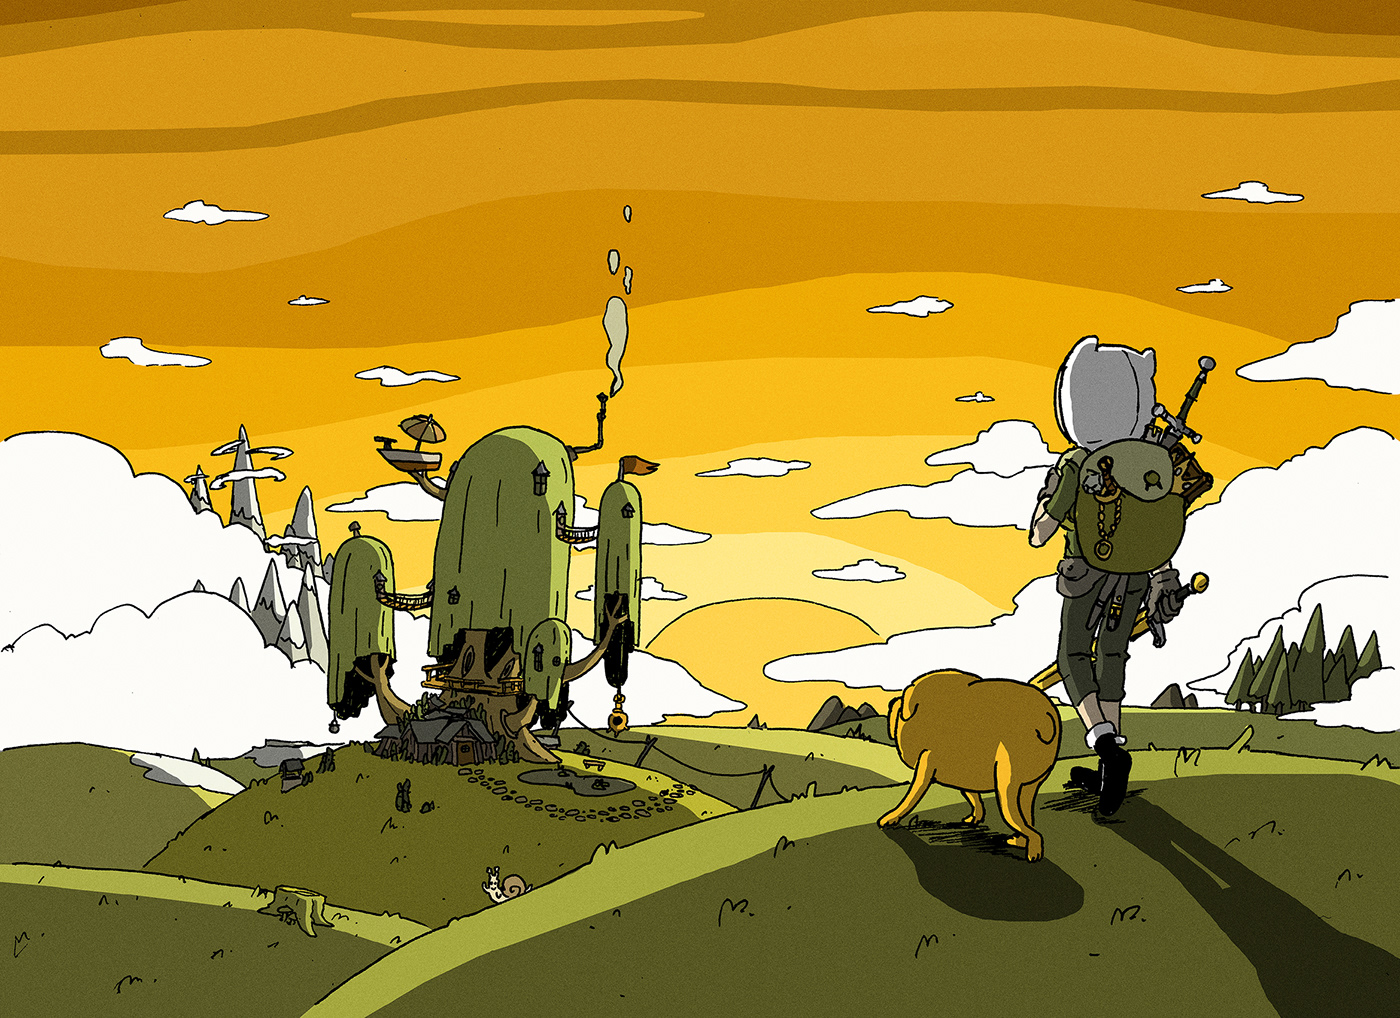 adventuretime adventure cartoonnetwork Finn Jake Sword Tree  Landscape nostalgia friends